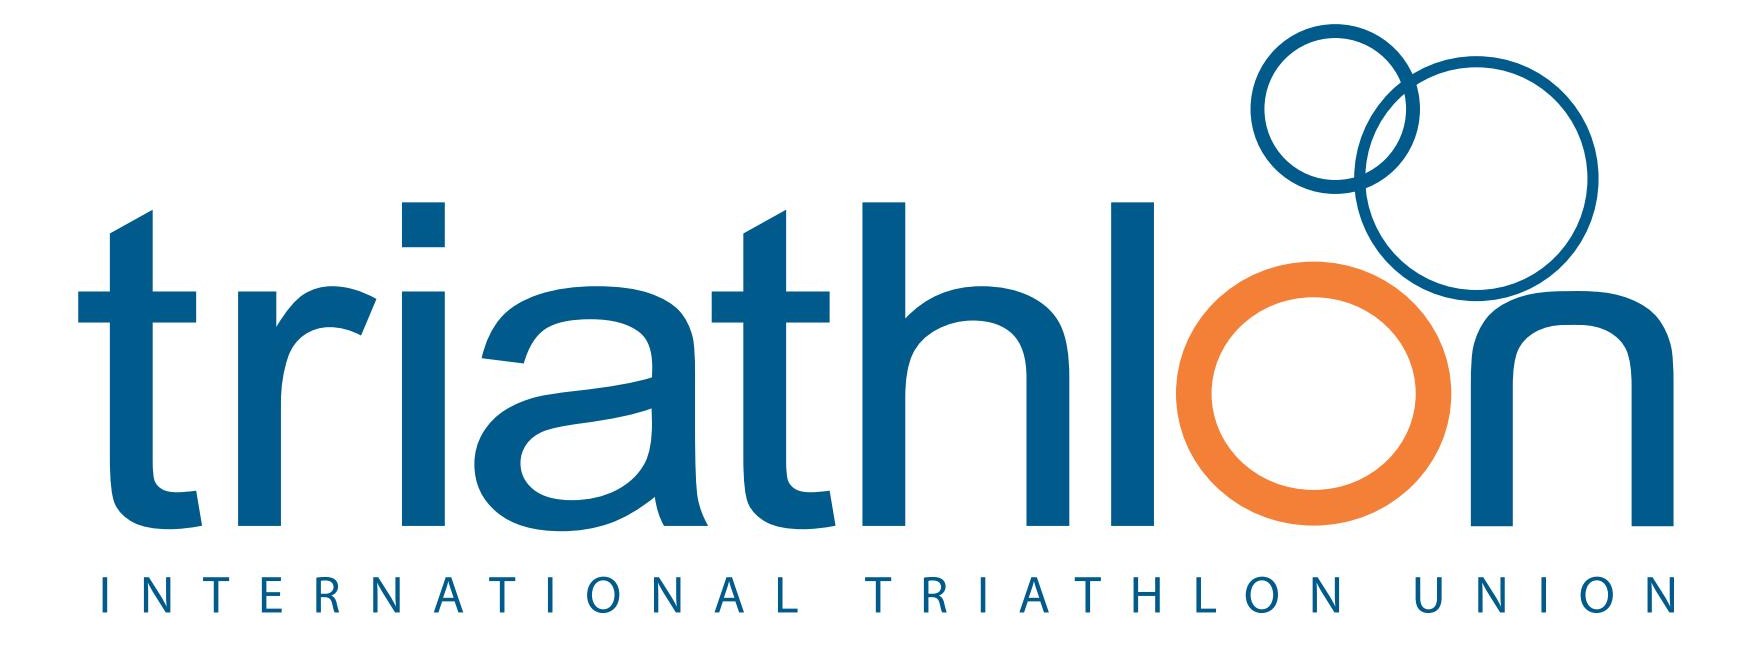 International Triathlon Union (ITU) Logo [EPS File] Vector EPS ...